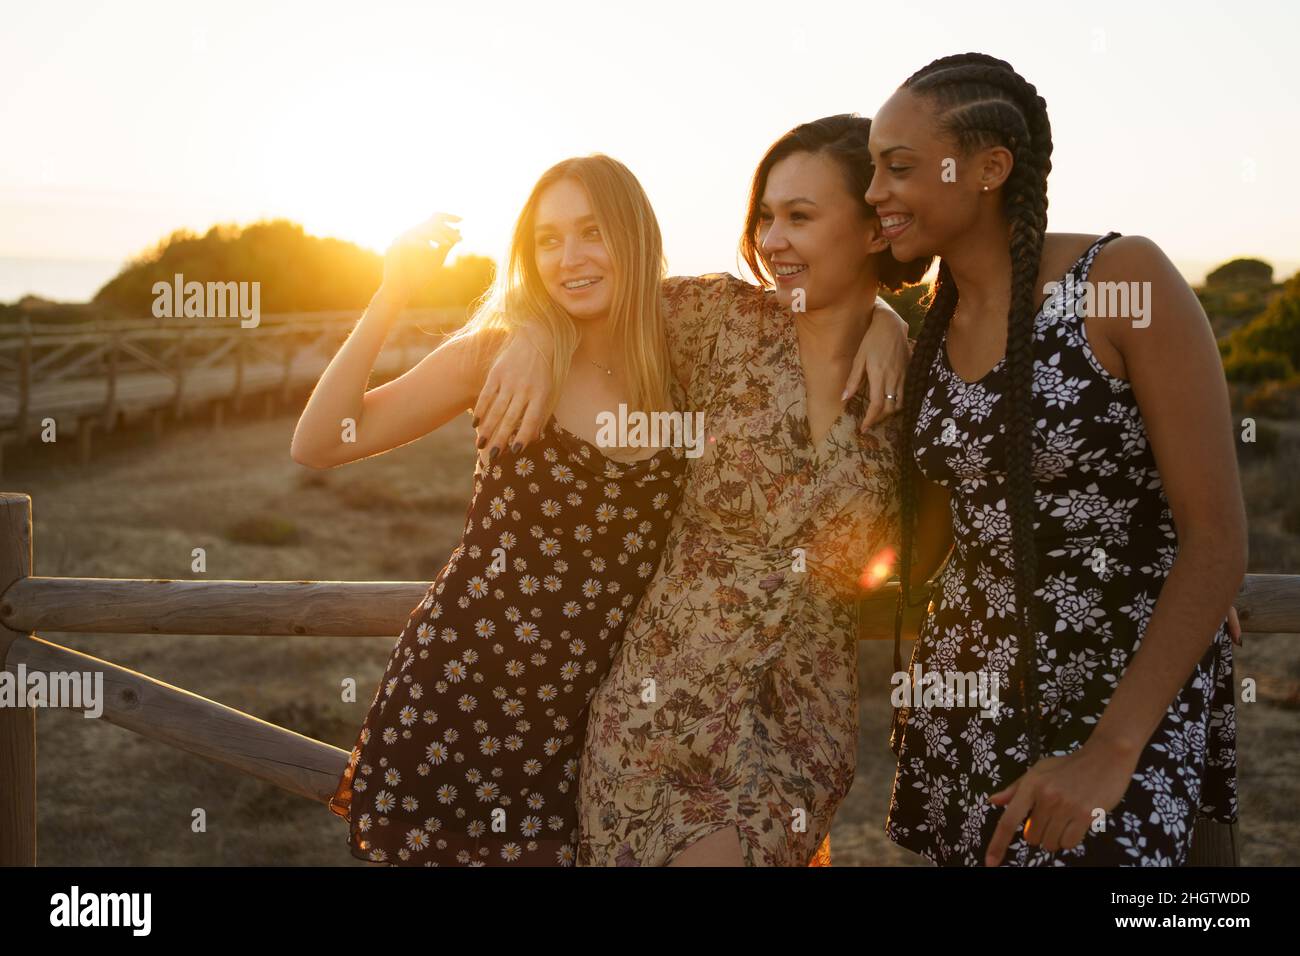 Smiling diverse women embracing on wooden boardwalk Stock Photo